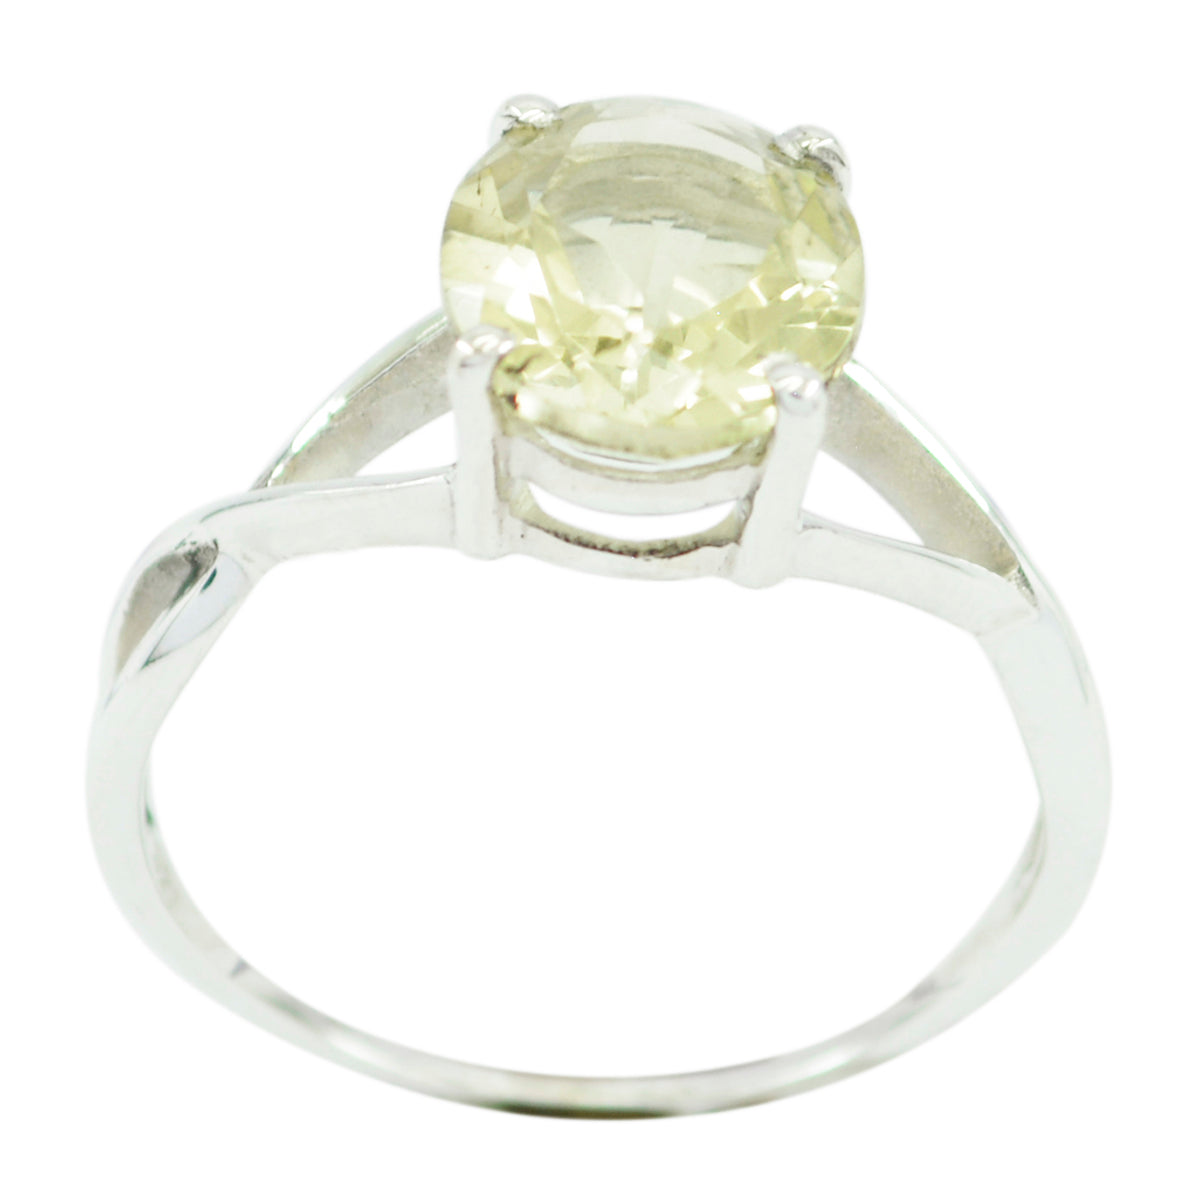 Riyo Seemly Gemstone Lemon Quartz 925 Silver Ring Suppiler Jewelry